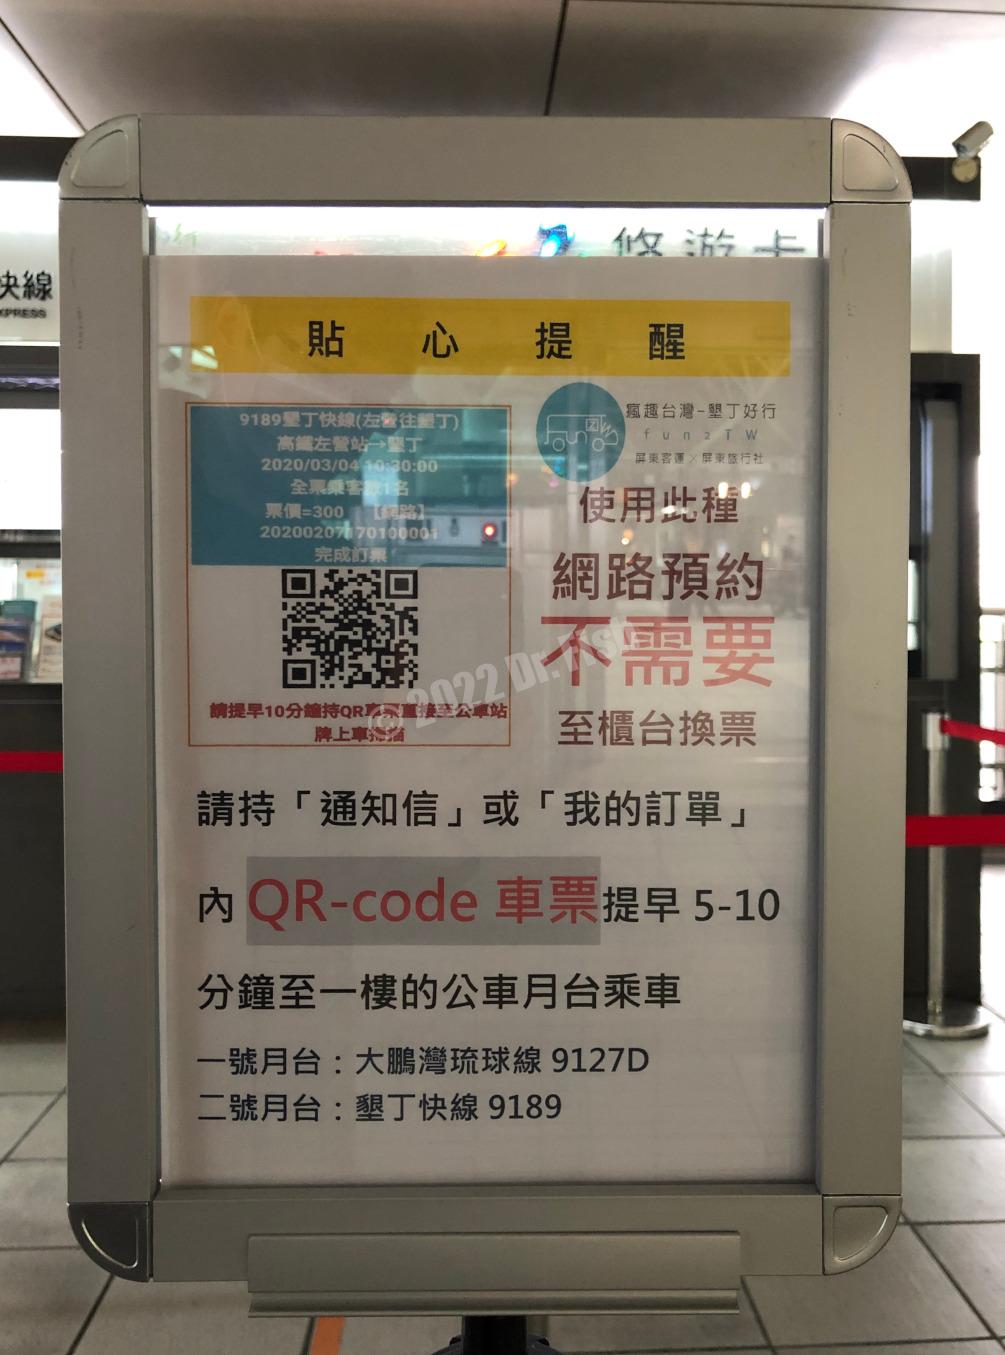 Kenting express notice at THSR Zuoying station